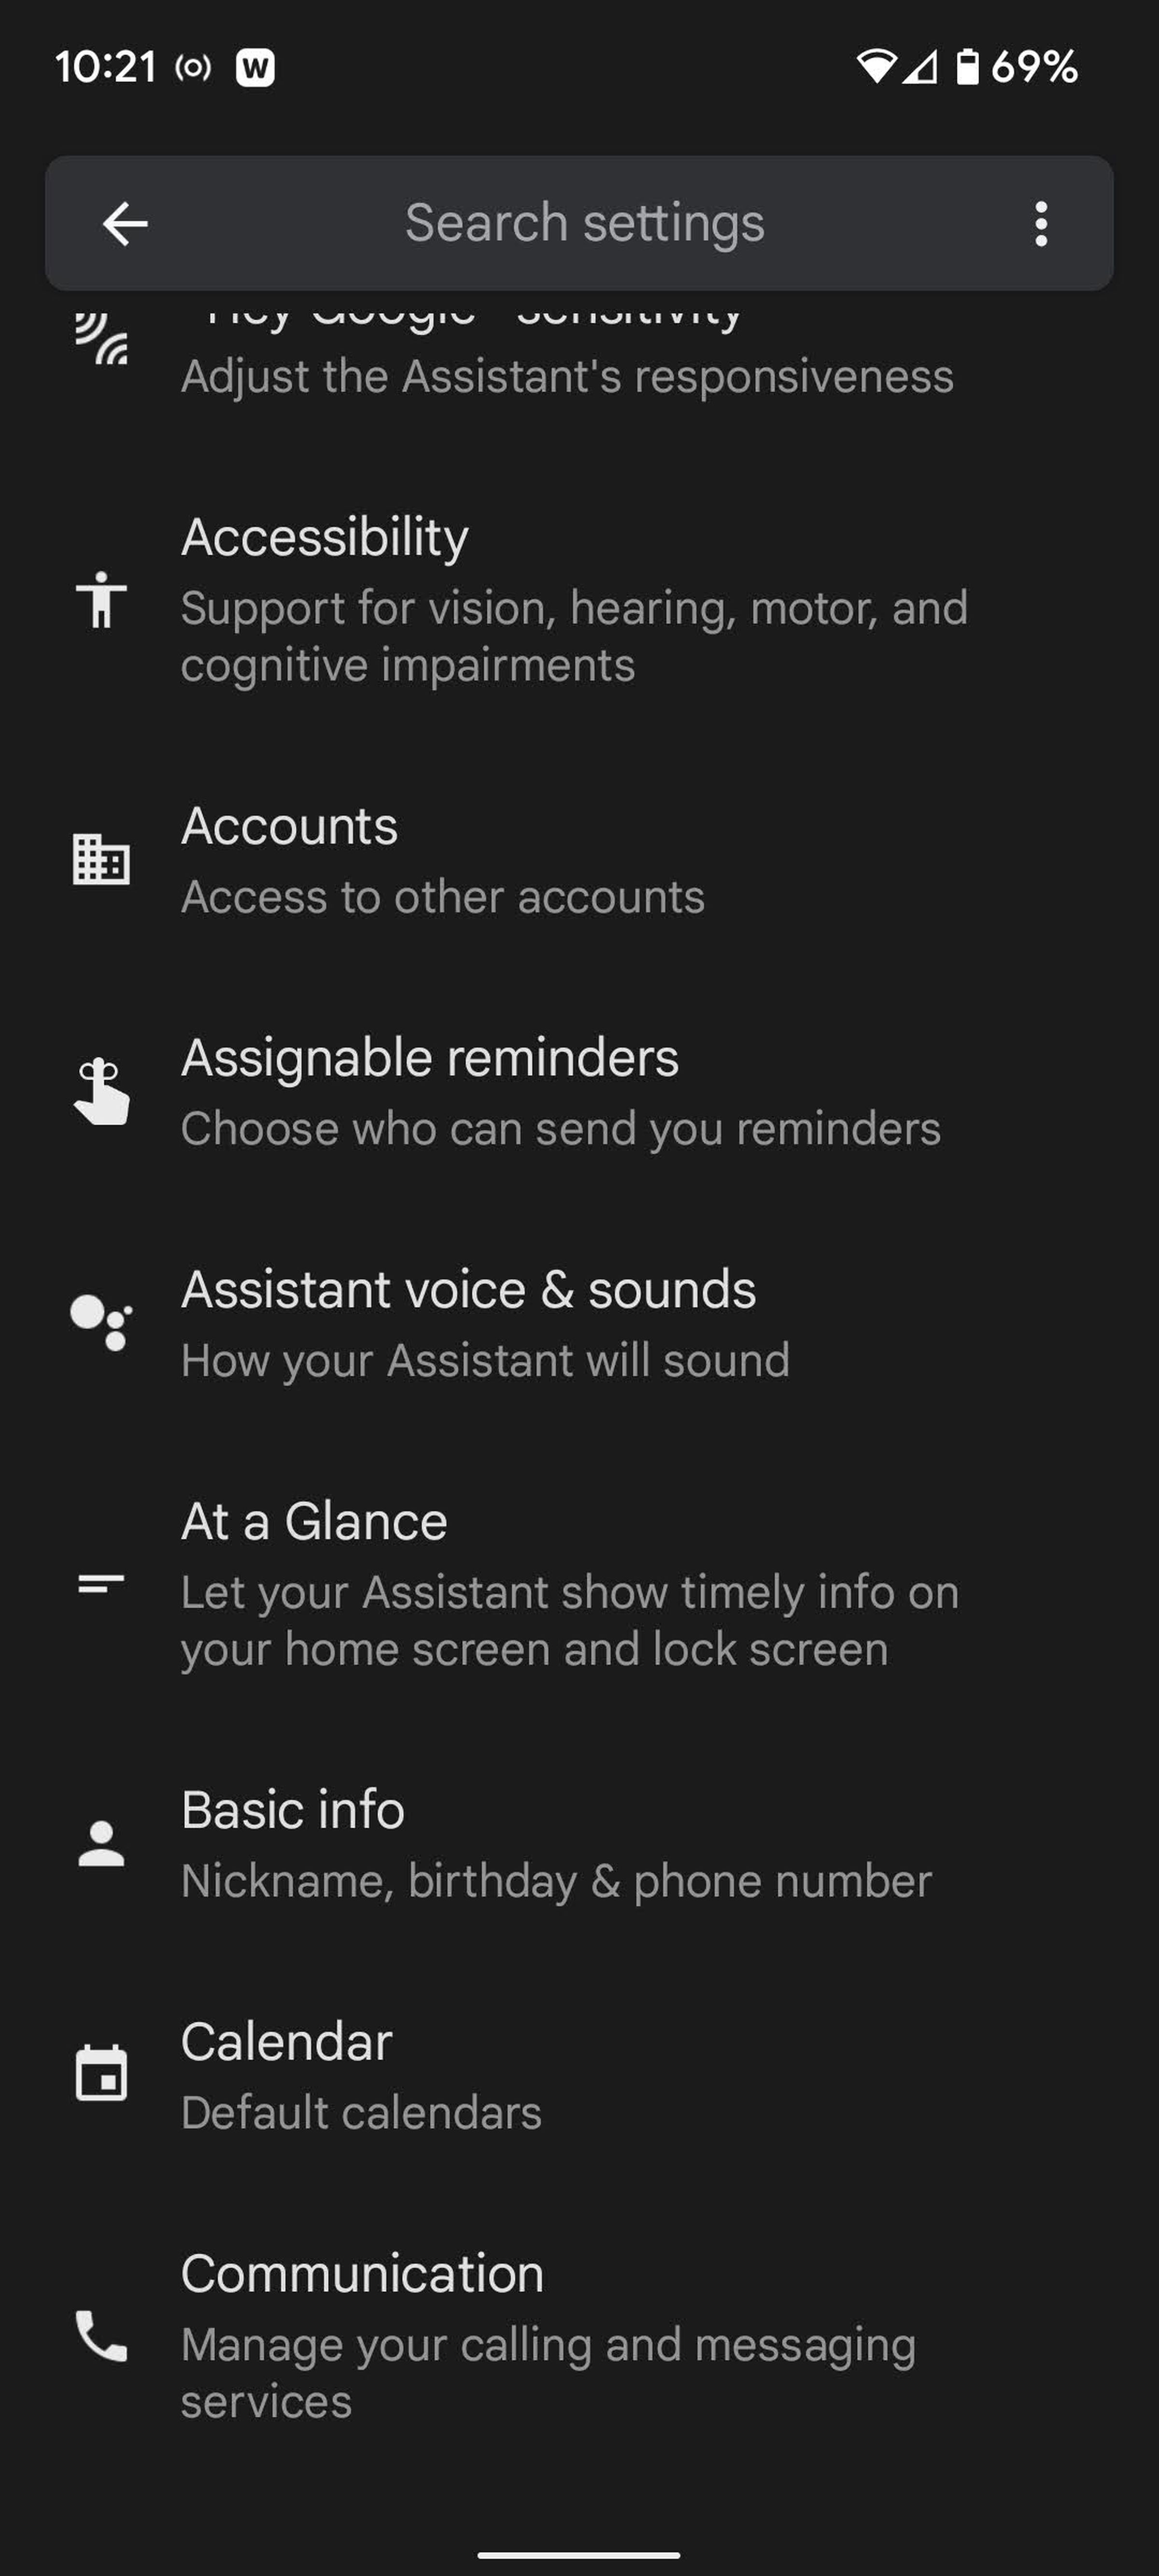 Select Assistant voice &amp; sounds.